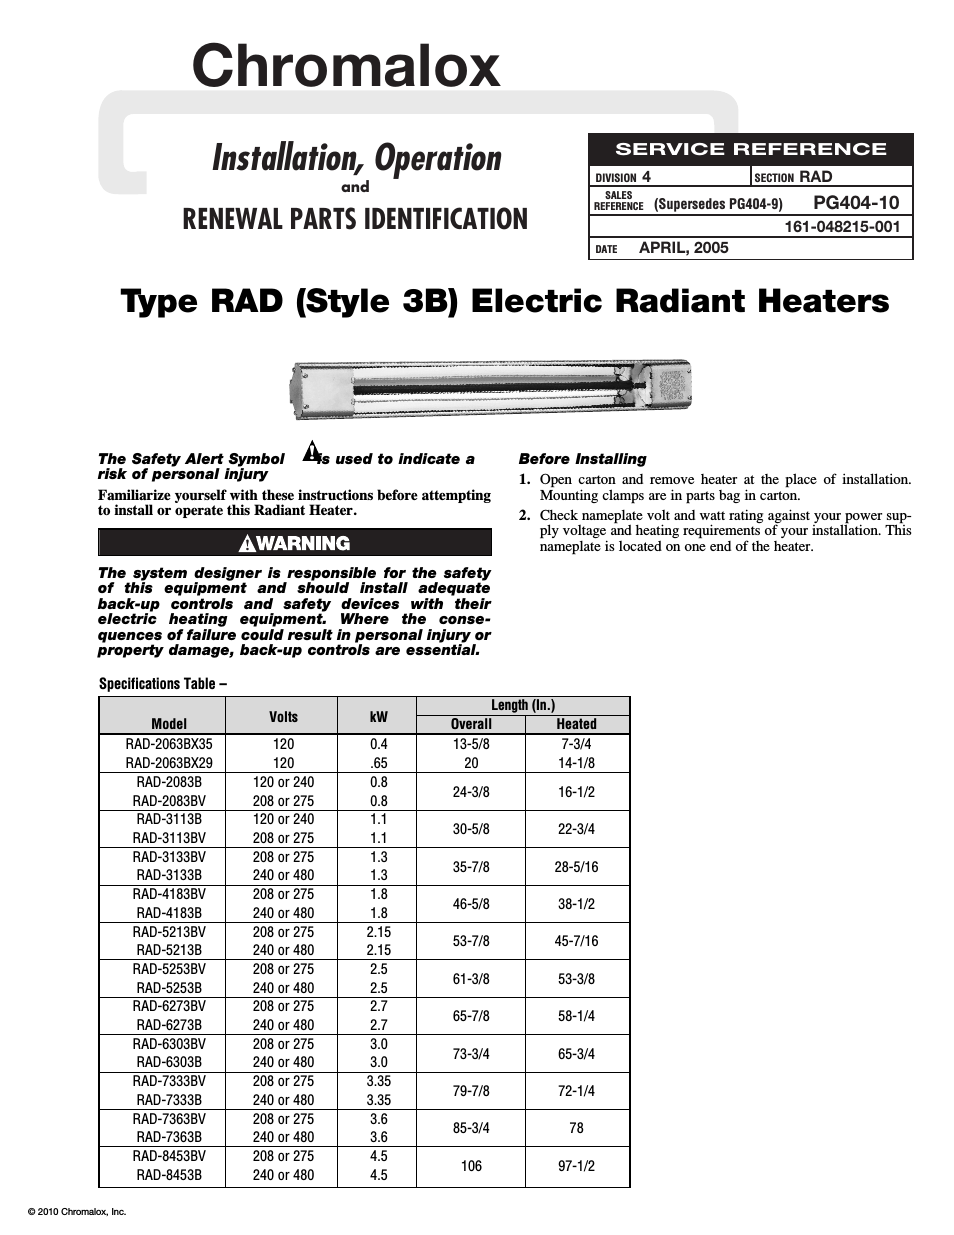 RAD-2063BX35